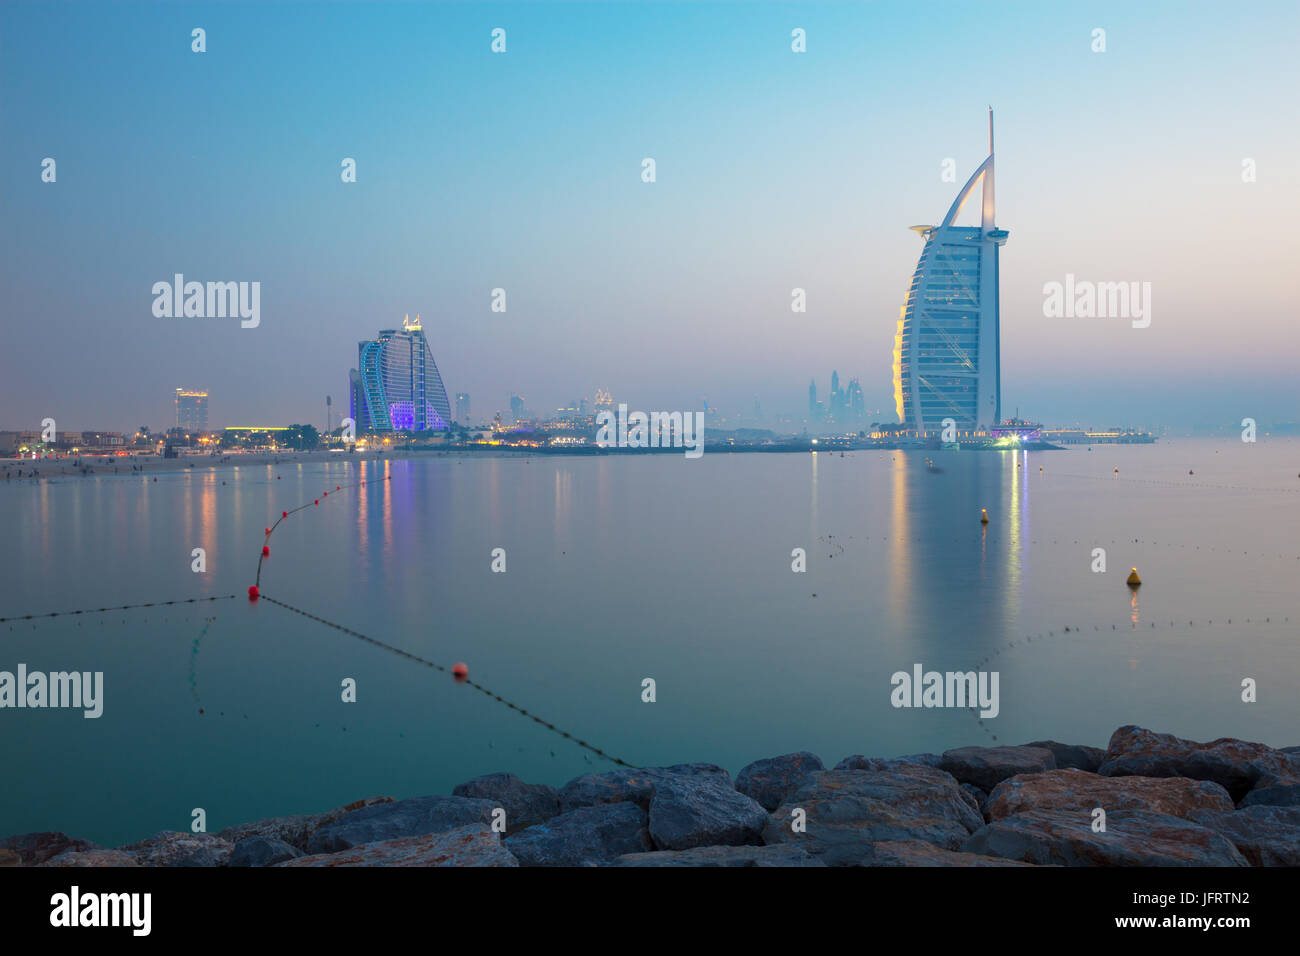 DUBAI, UAE - MARCH 30, 2017: The evening skyline with the Burj al Arab and Jumeirah Beach Hotels and the open Jumeriah beach. Stock Photo